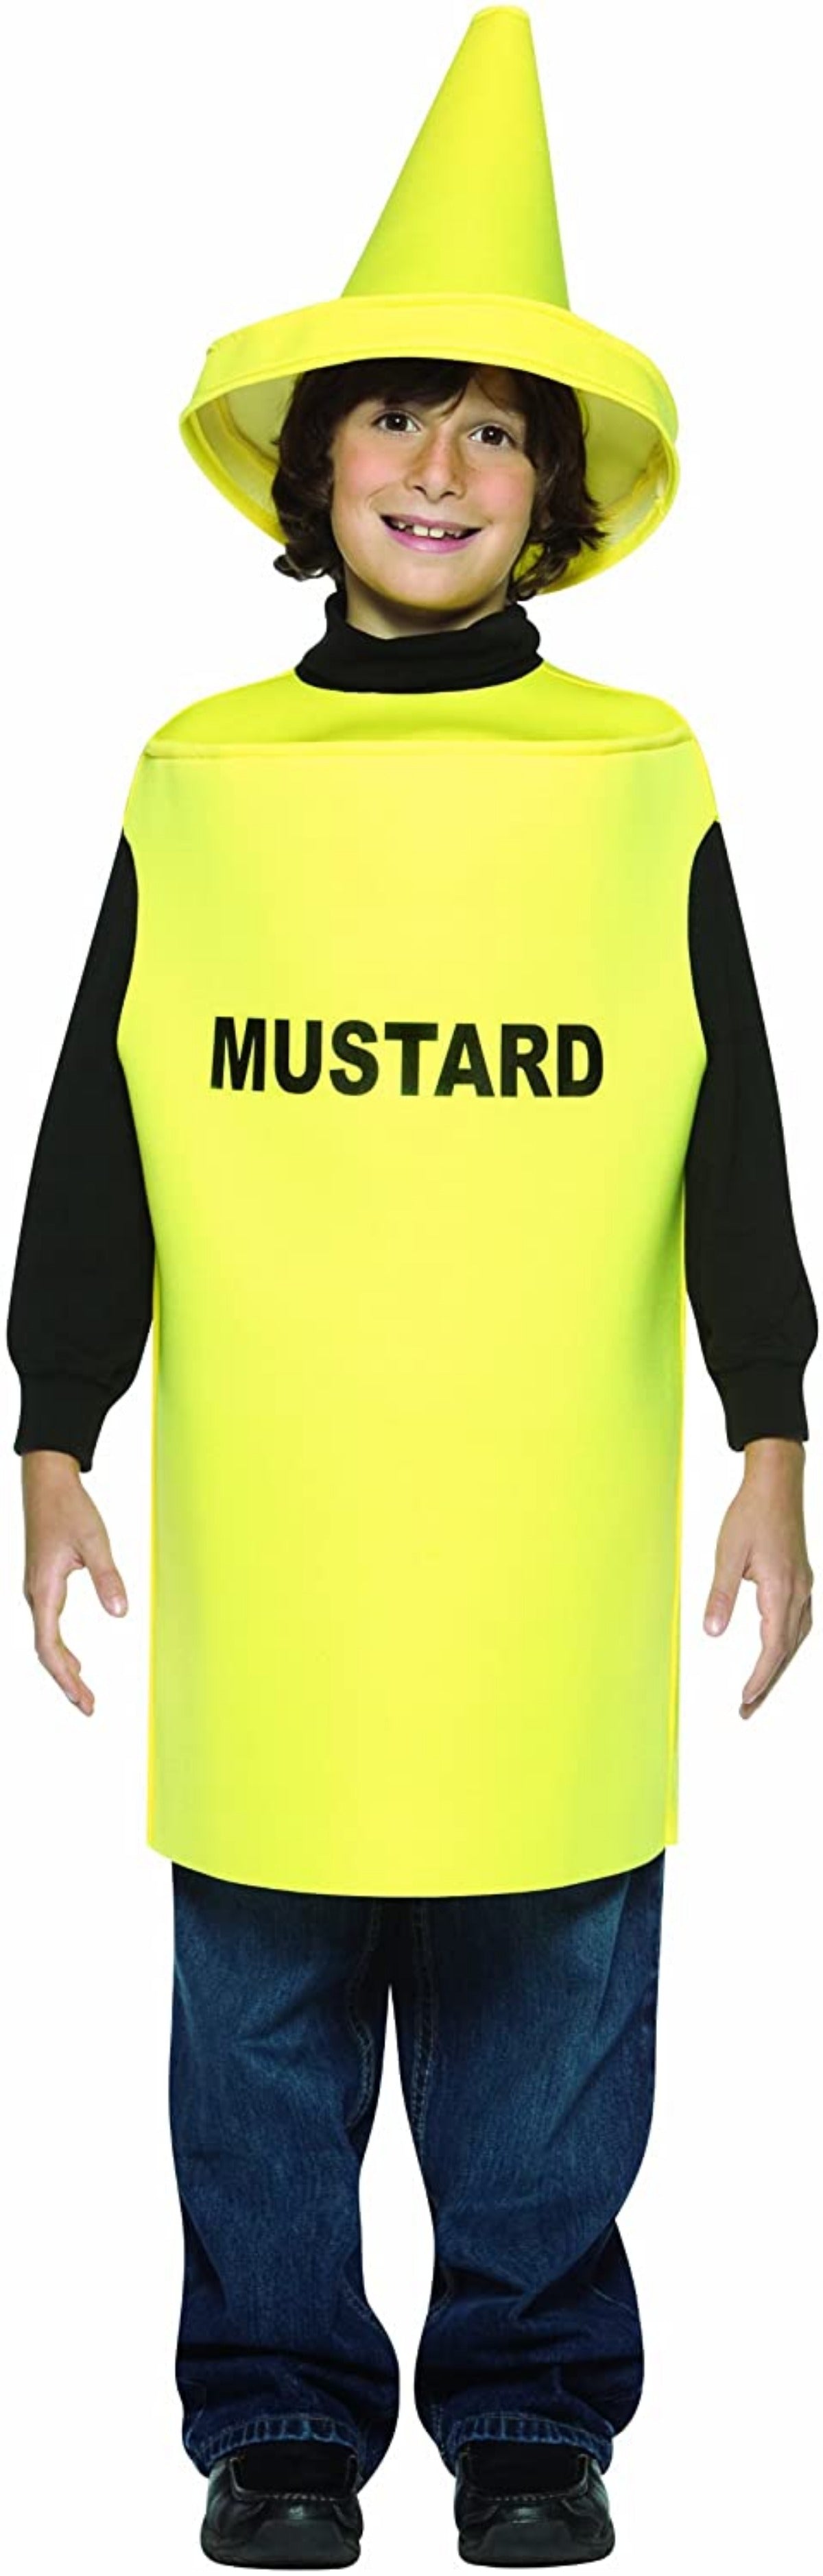 Kid's Mustard Costume